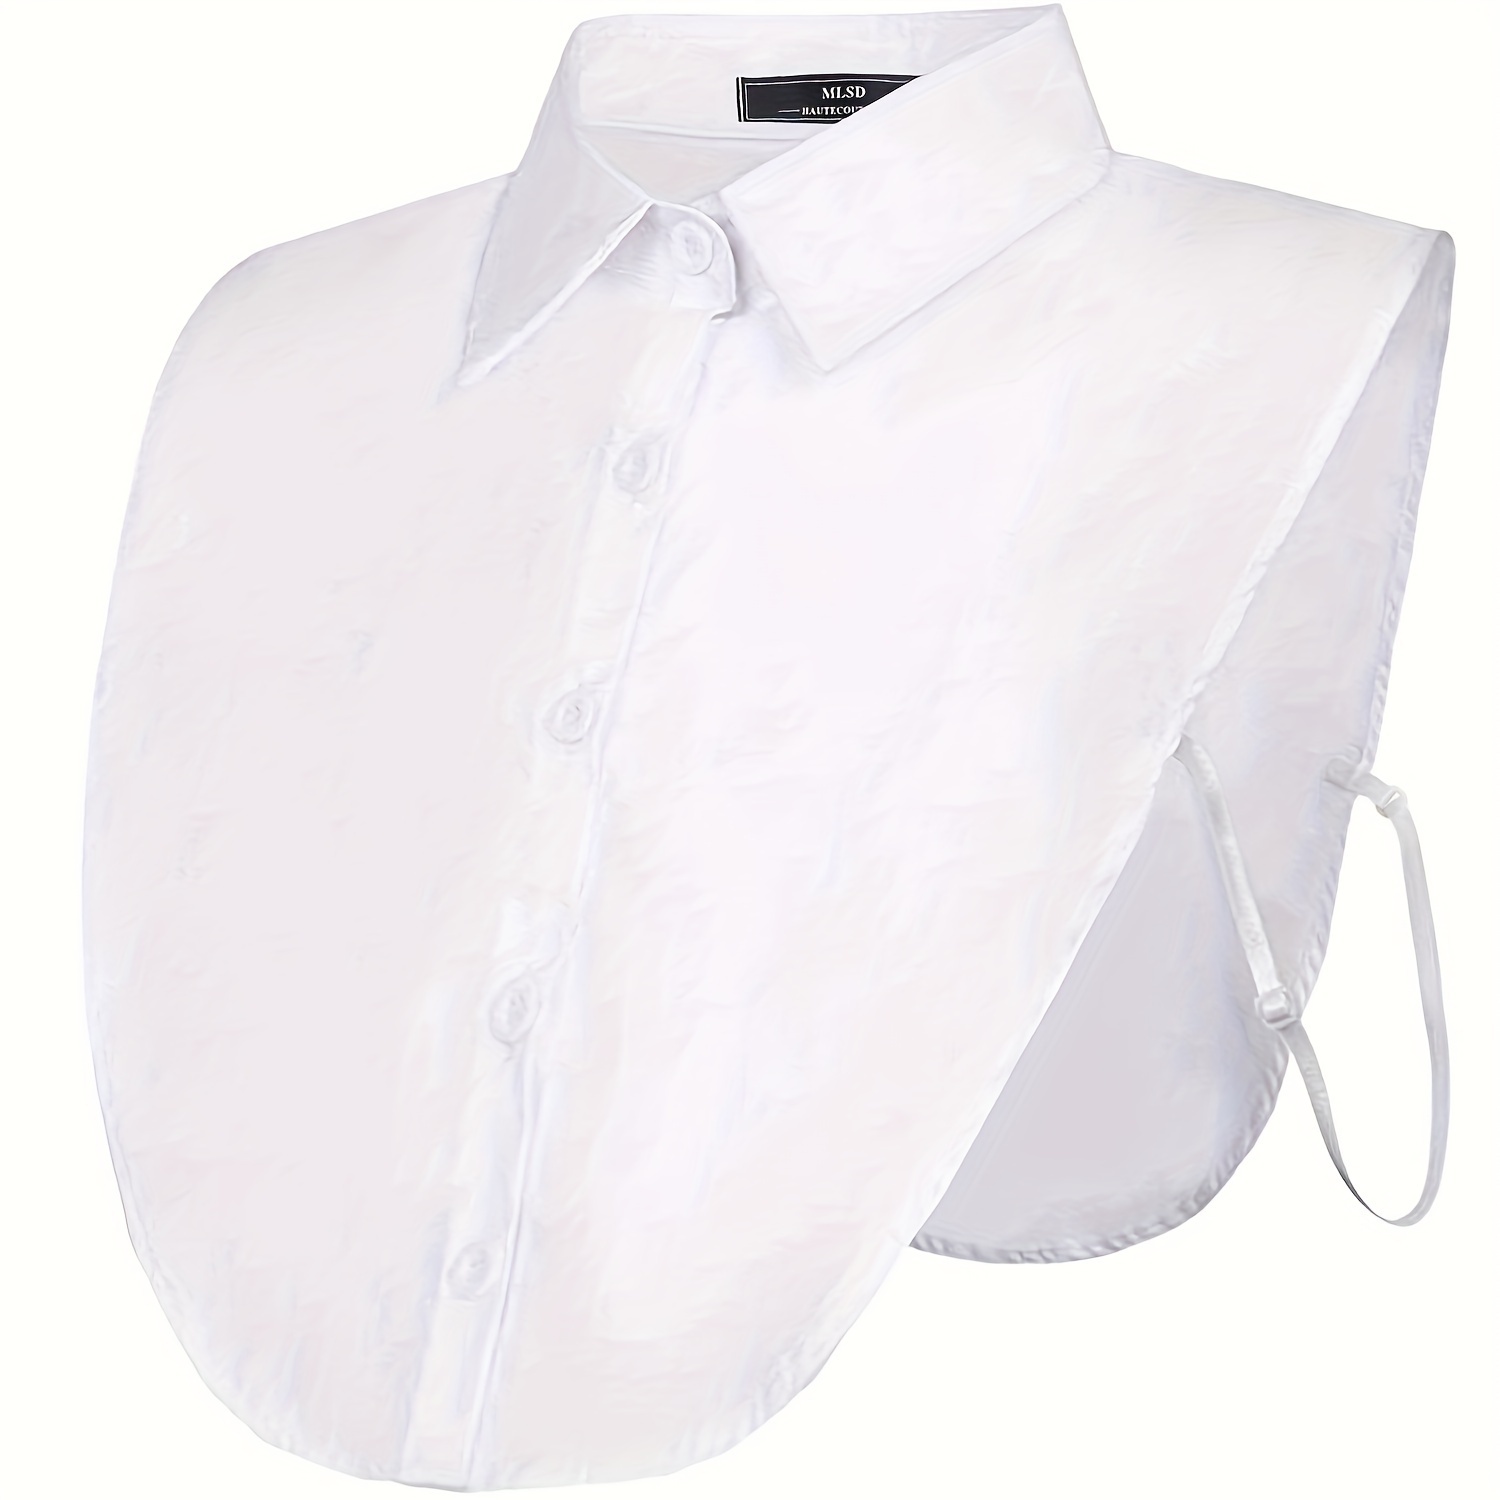 8pcs Collar Extender Buttons, Neck Extender Elastic Metal Button For Shirt  Dress Coat Invisible No Sew